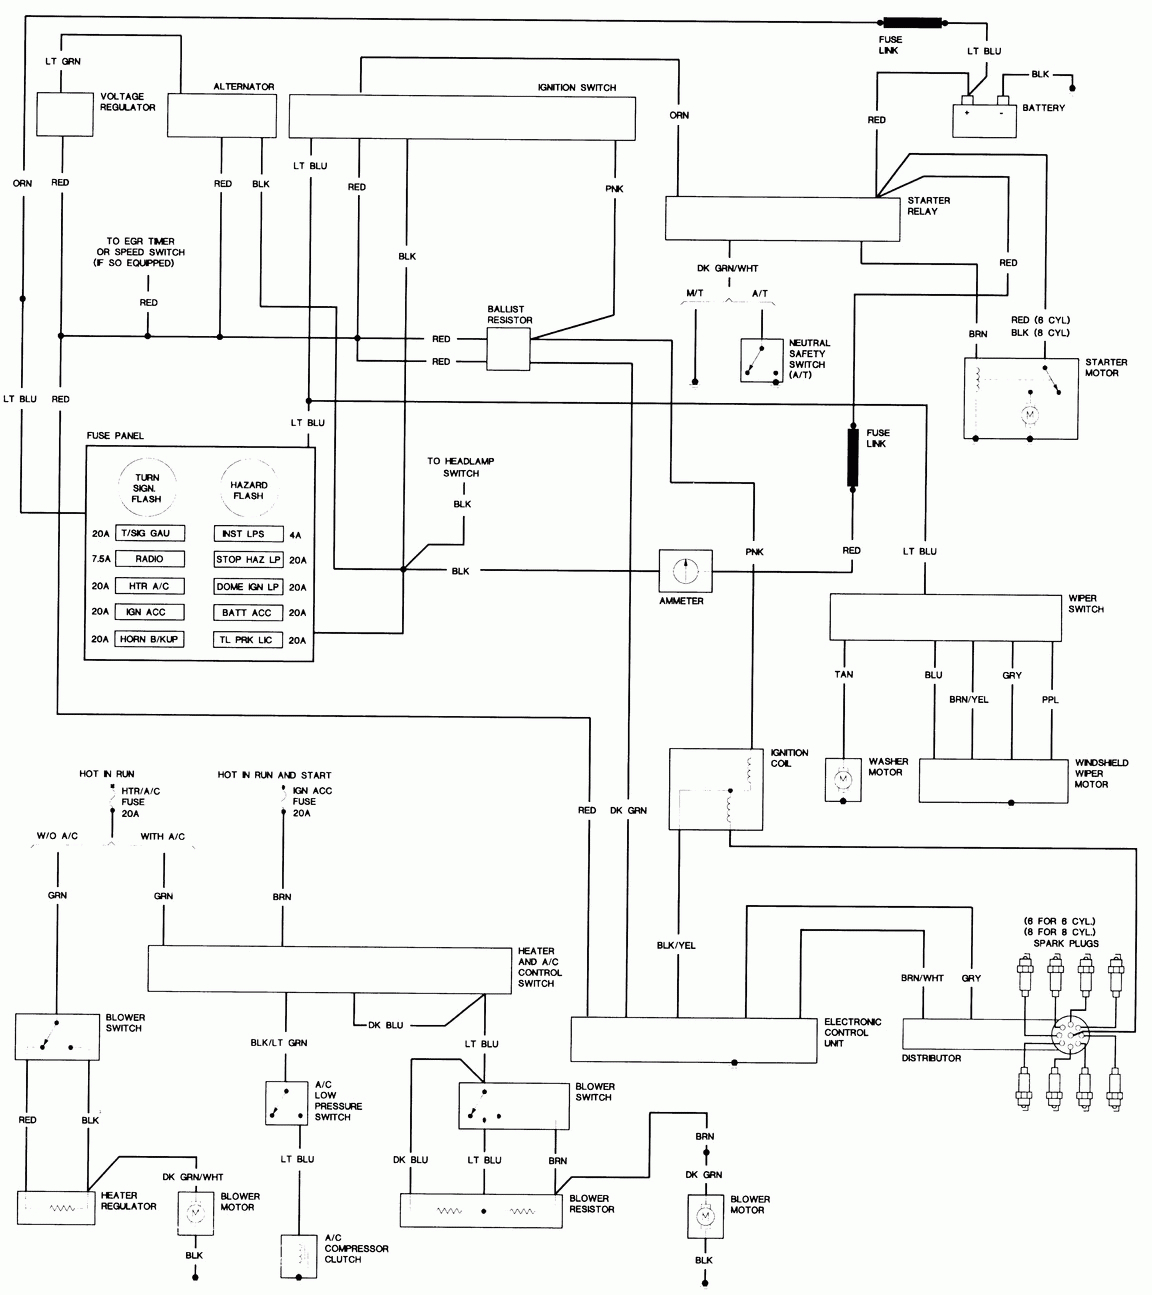 1986 Winnebago Wiring Diagram Battery | Wiring Diagram - Winnebago Motorhome Wiring Diagram